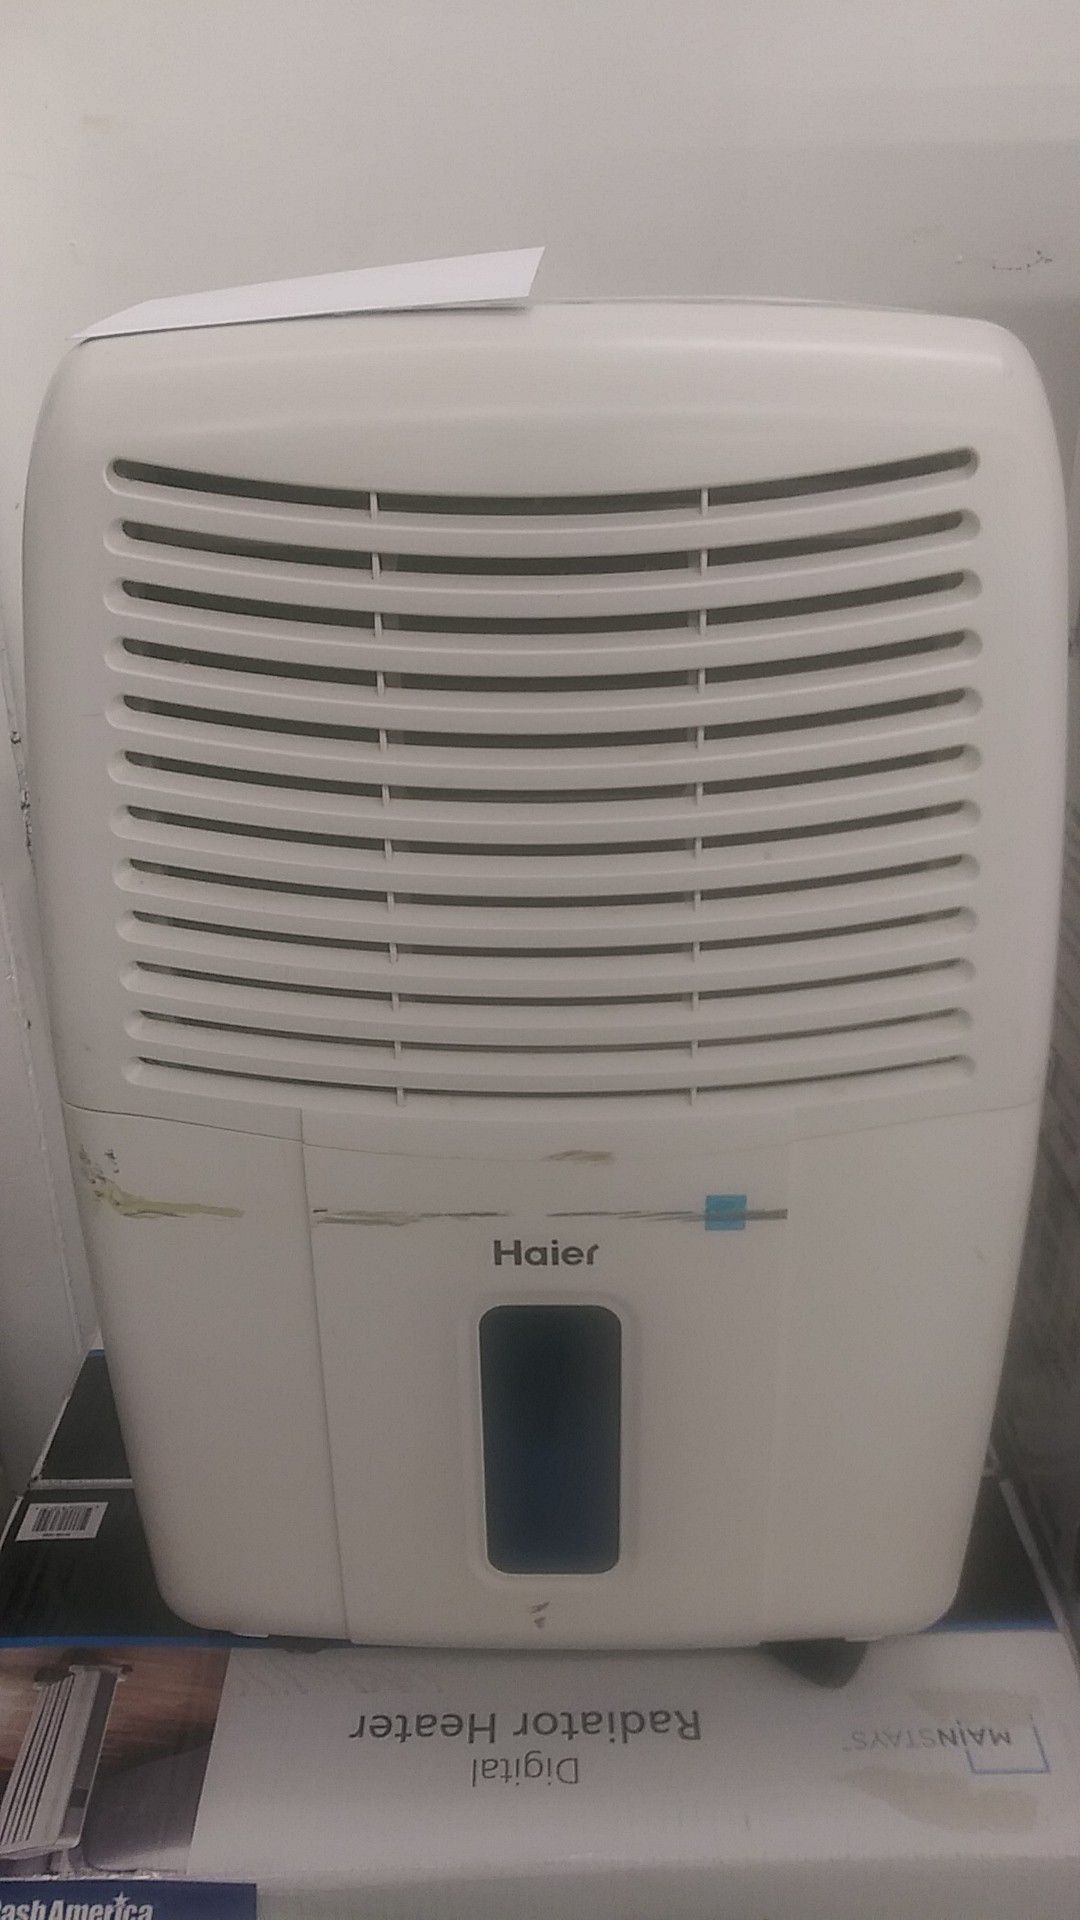 Haier humidifier